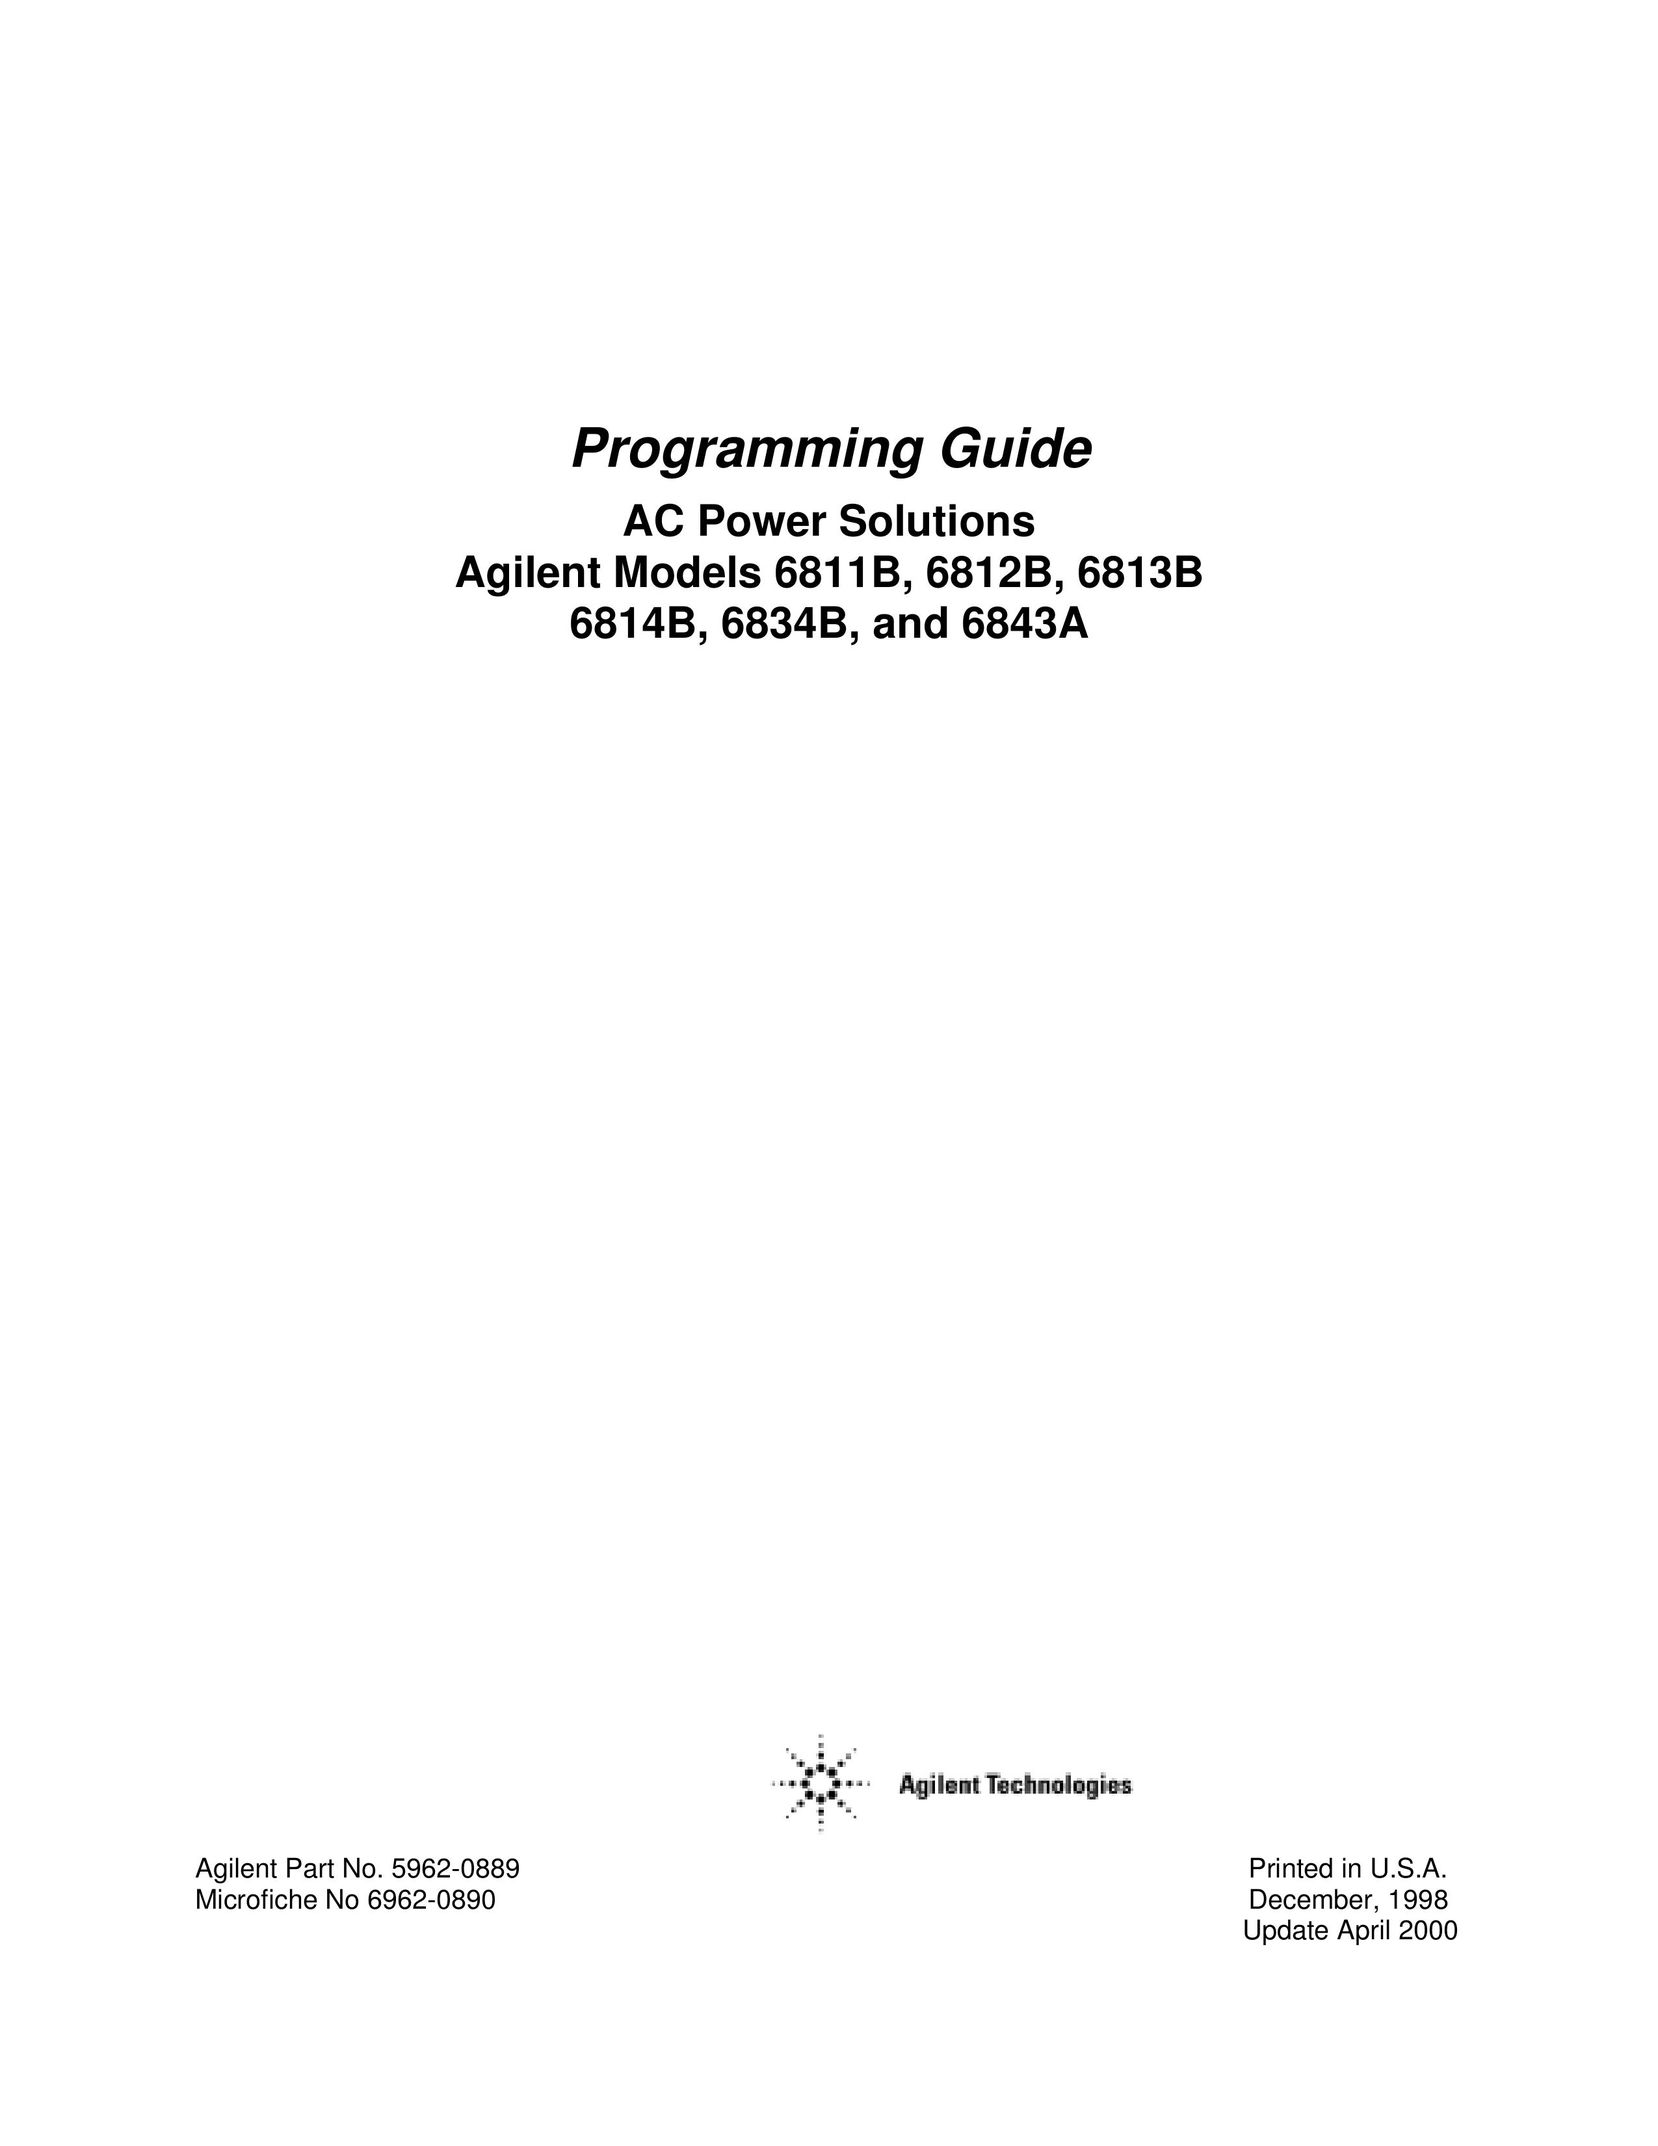 Agilent Technologies 6811B Welding System User Manual